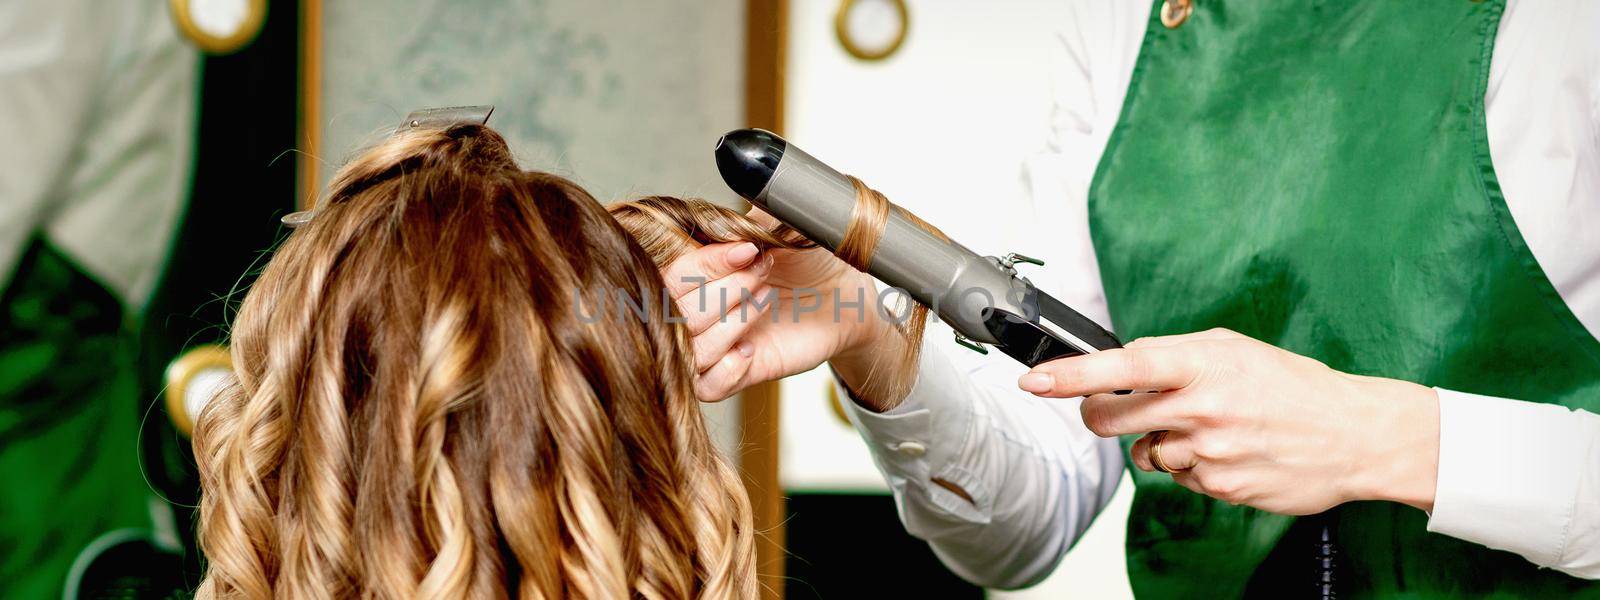 Hairdresser curling hair with curling iron by okskukuruza